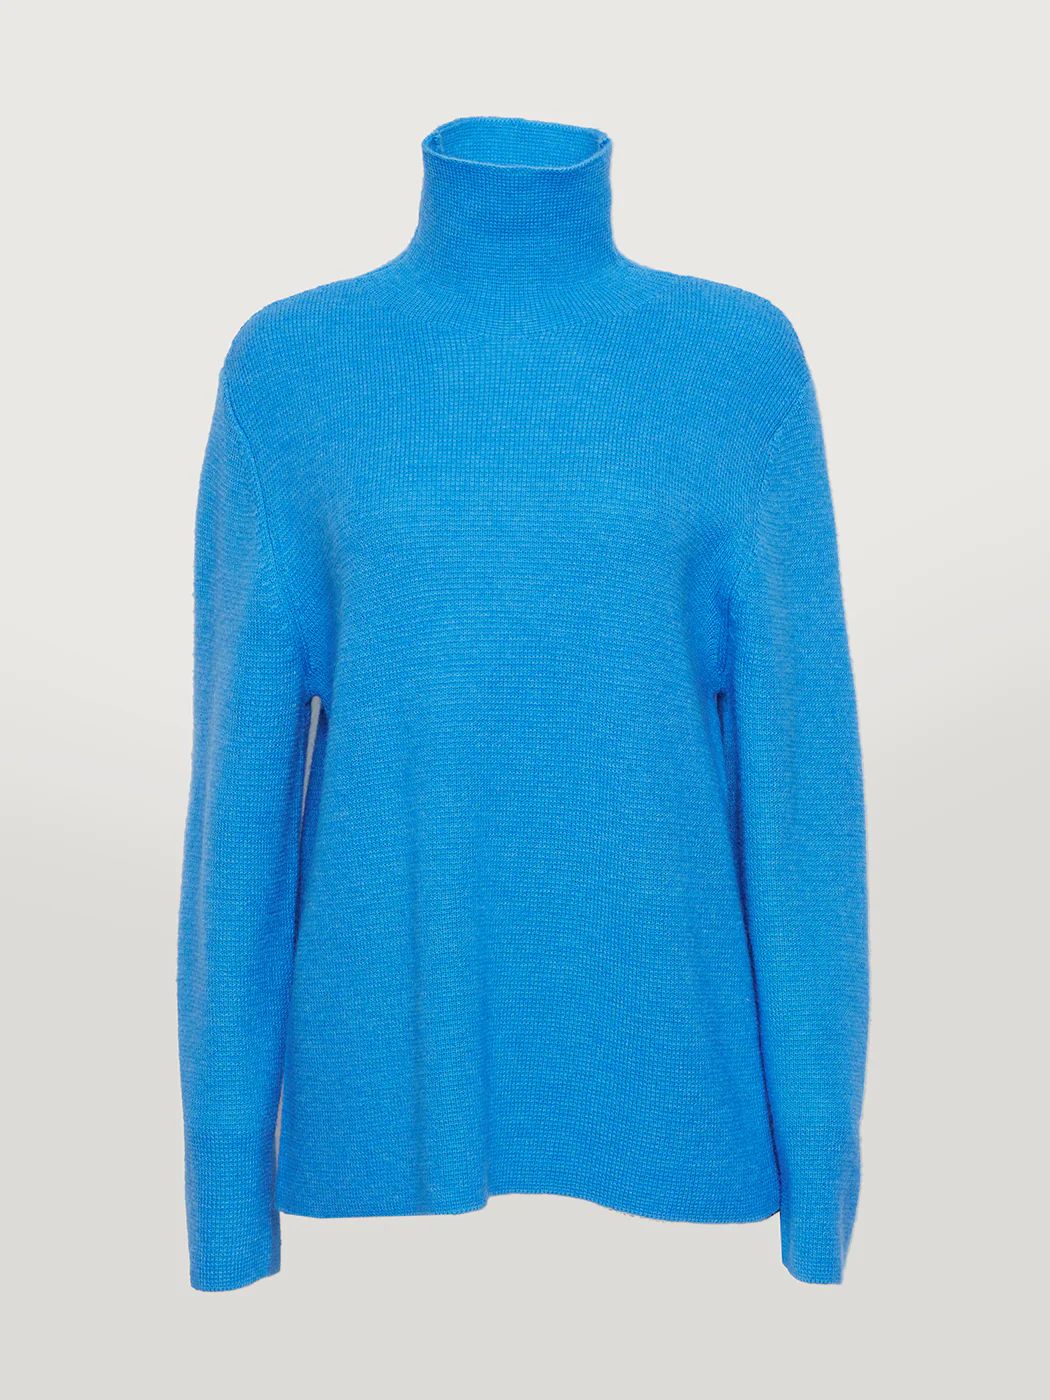 Callisto Sweater - Princess Blue | Carbon38